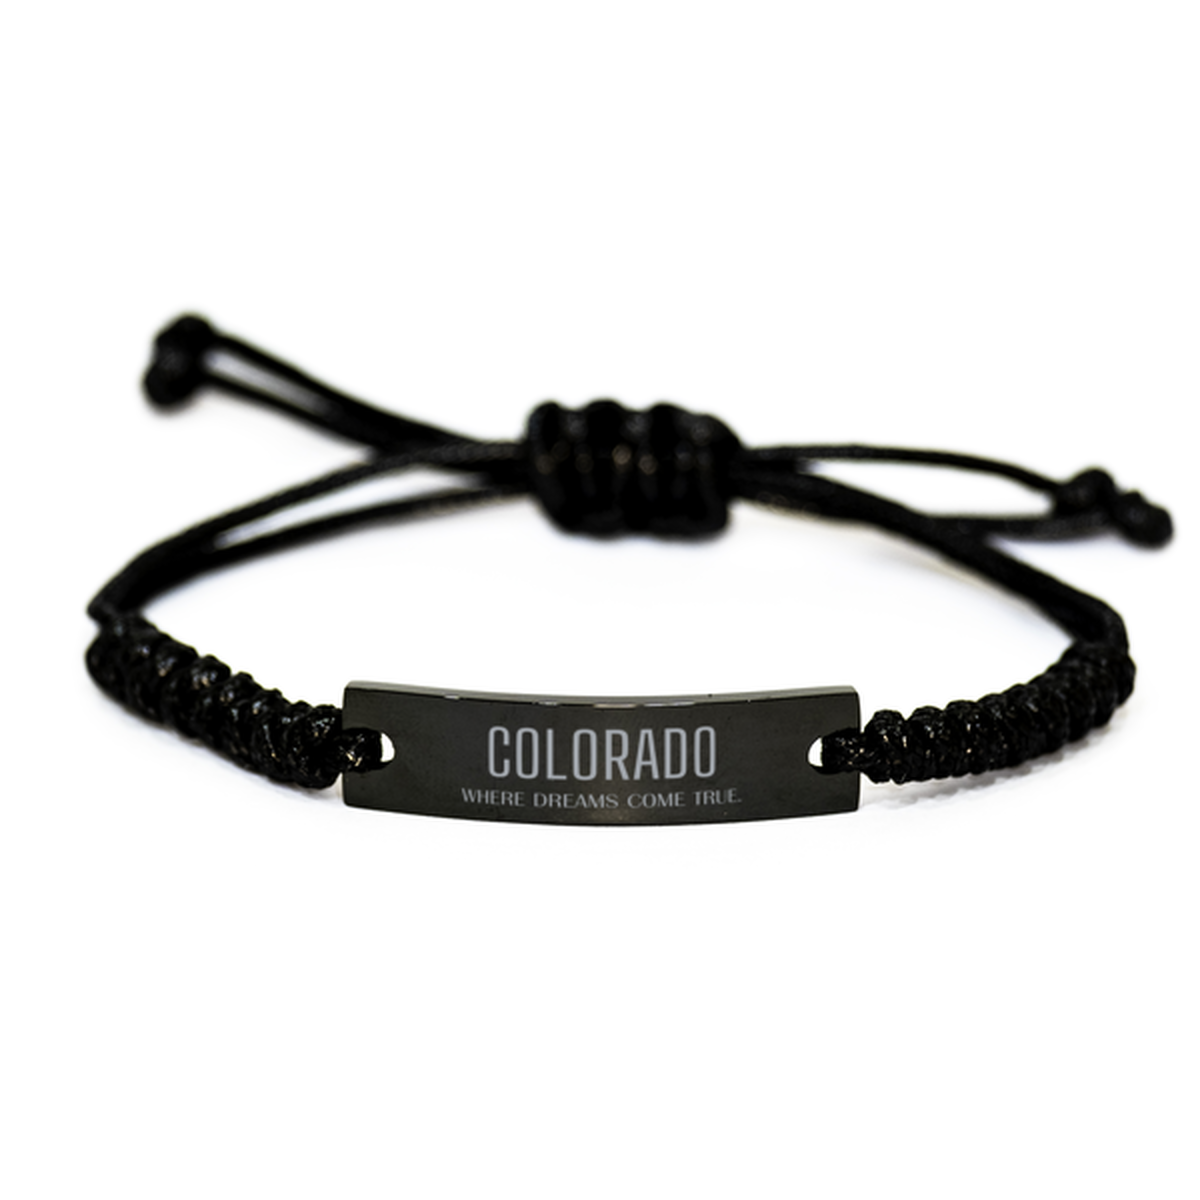 Love Colorado State Black Rope Bracelet, Colorado Where dreams come true, Birthday Inspirational Gifts For Colorado Men, Women, Friends